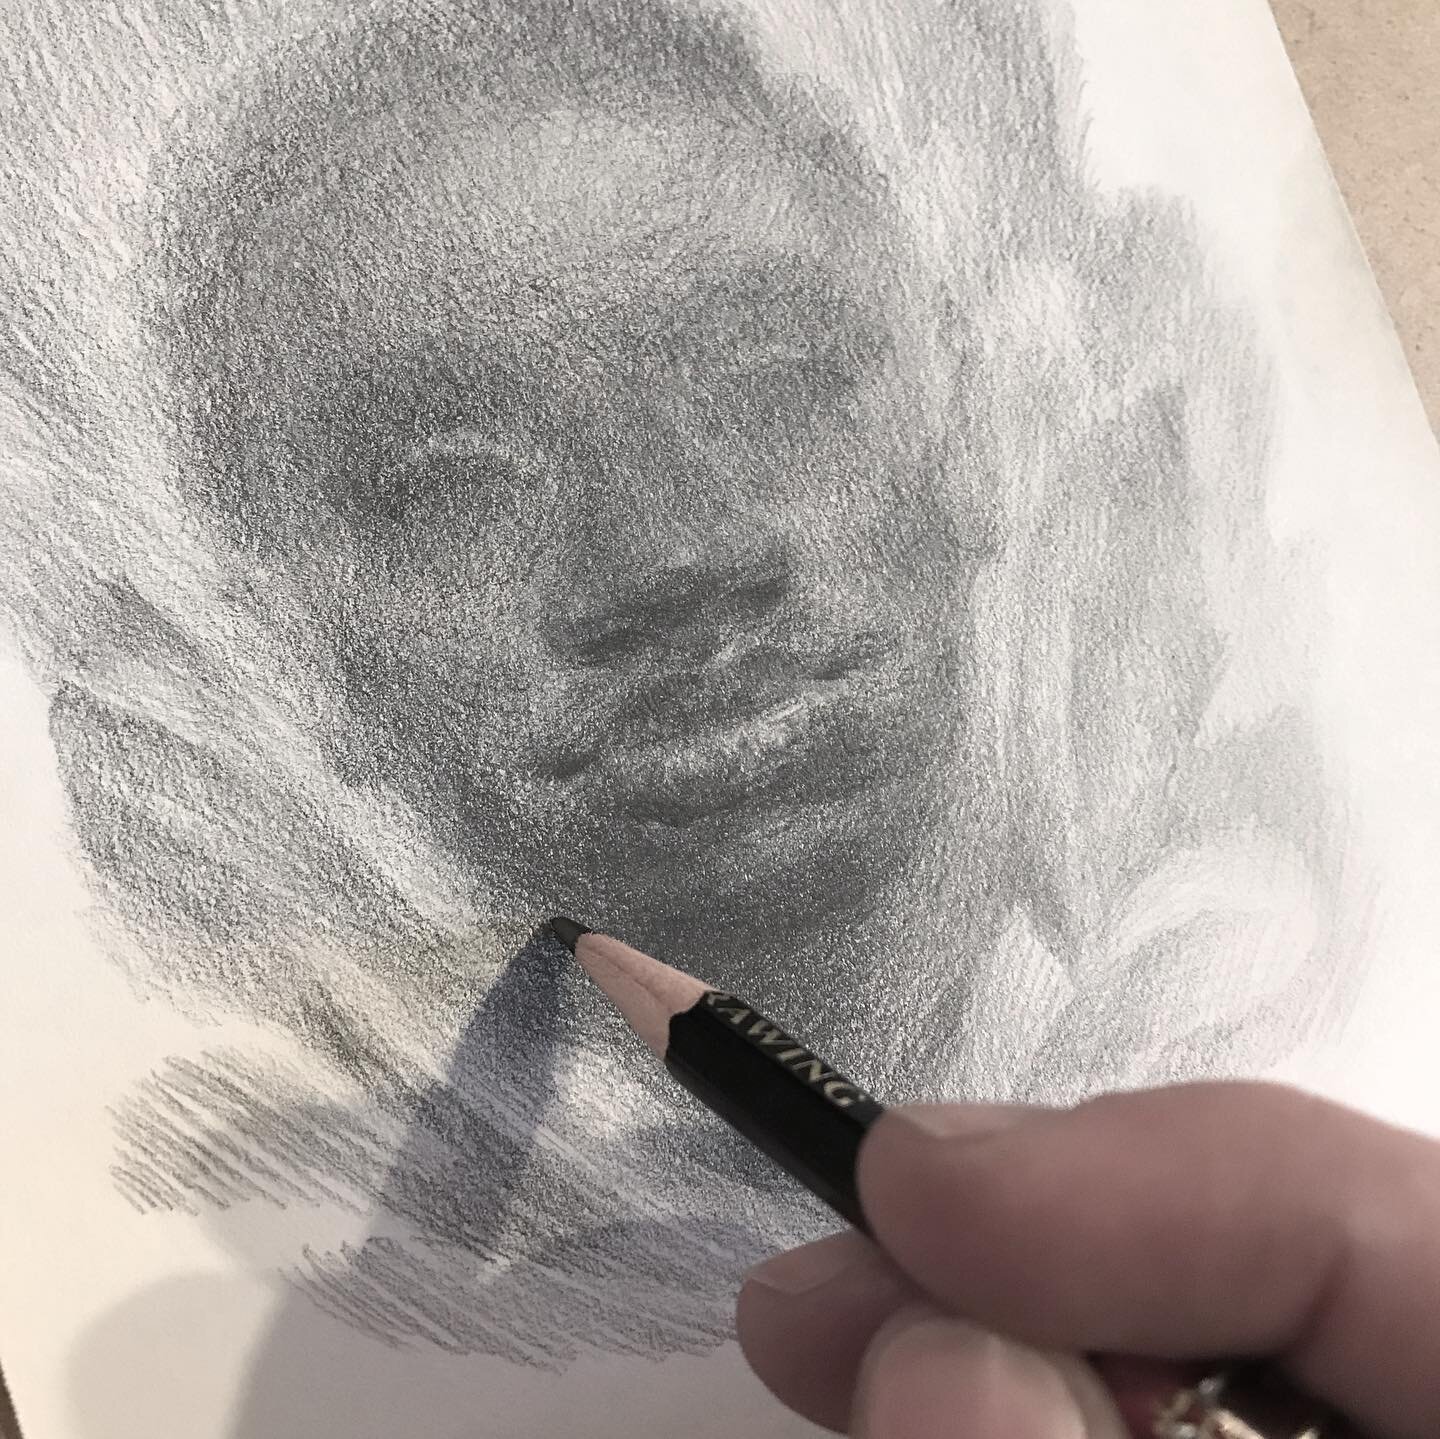 Drawing this weekend...
-
-
-
-
-
-
-
-
-
#lauradreyerart #drawing #womenwithpencils #womenwhodraw #visiblewomen #portraitart #dailyart #artistoninstagram #portraitdrawing #lauradreyerart